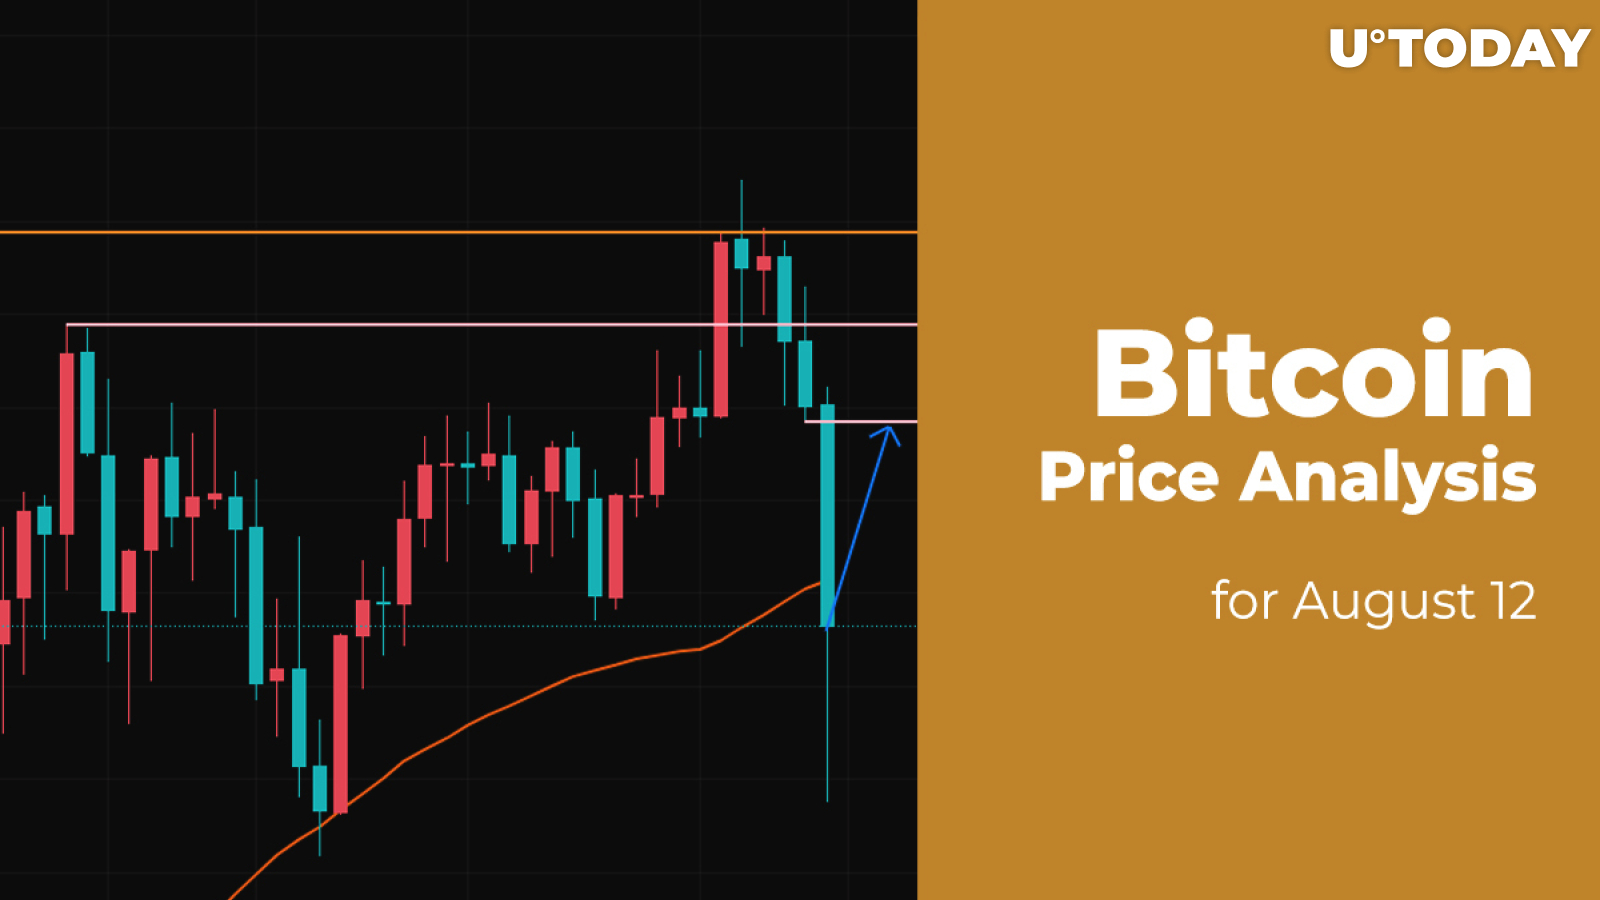 Bitcoin (BTC) Price Analysis for August 12